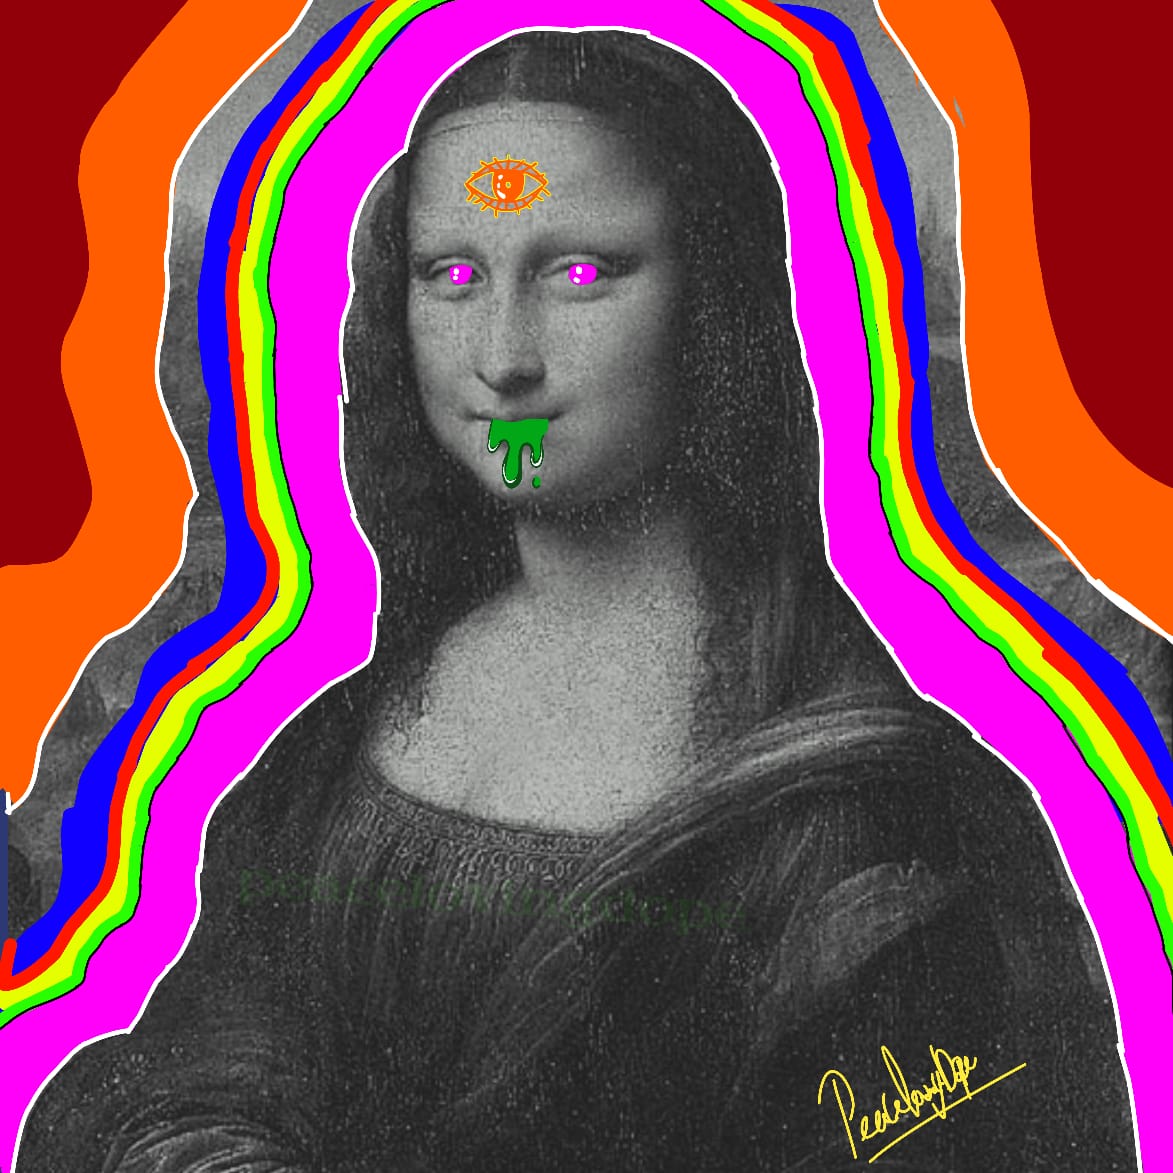 A digital collage of the Mona Lisa with a rainbow, an eye emoji, and a green tongue. - Mona Lisa